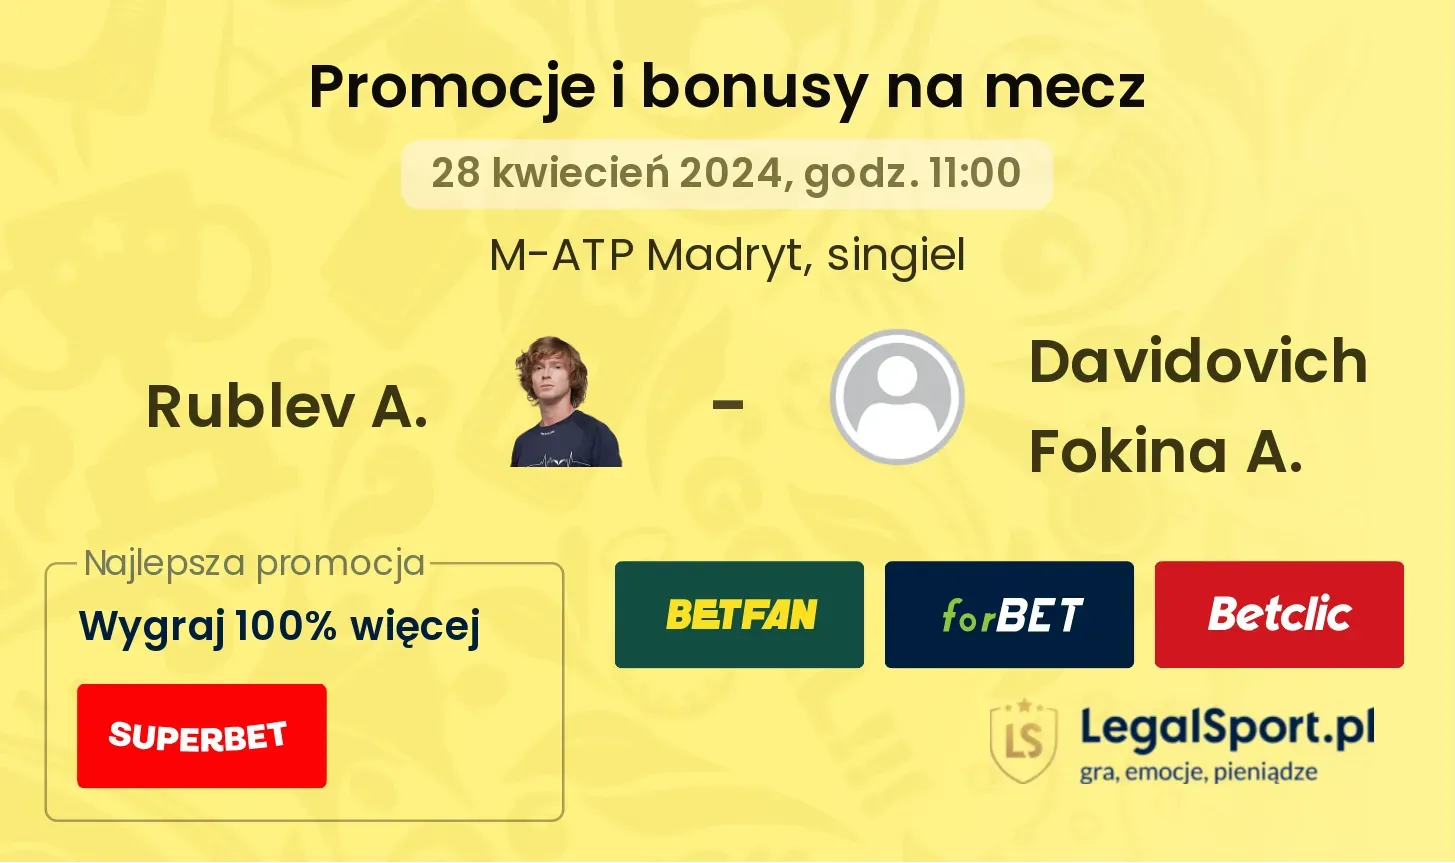 Rublev A. - Davidovich Fokina A. promocje bonusy na mecz